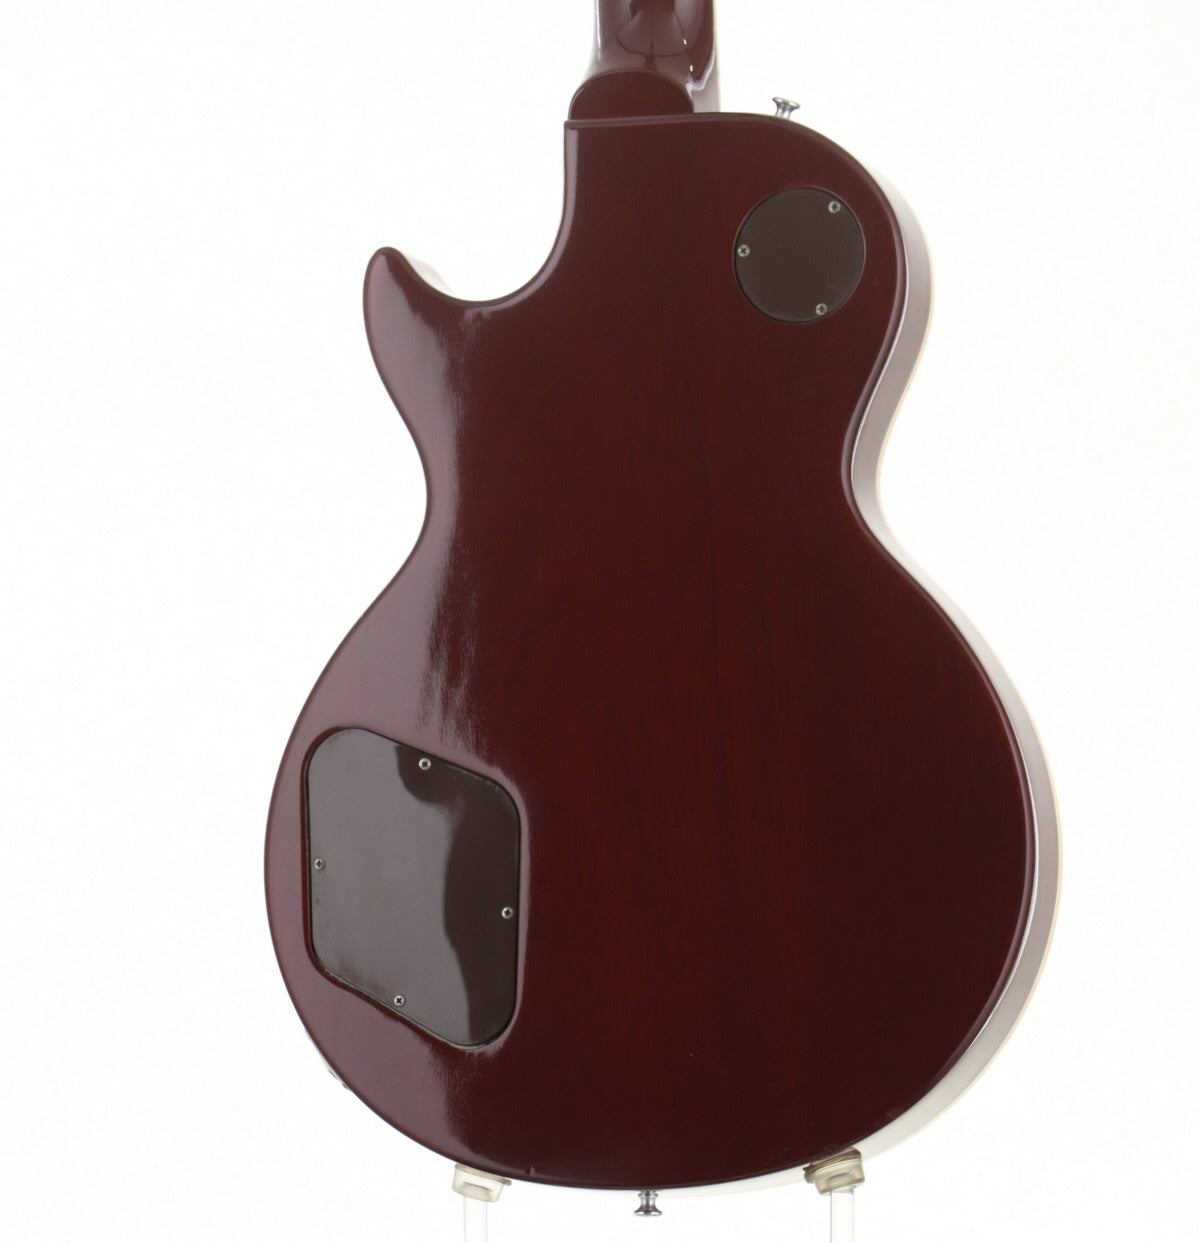 [SN 92101302] USED GIBSON USA / Les Paul Standard 1991 Heritage Cherry Sunburst Electric Guitar [10]